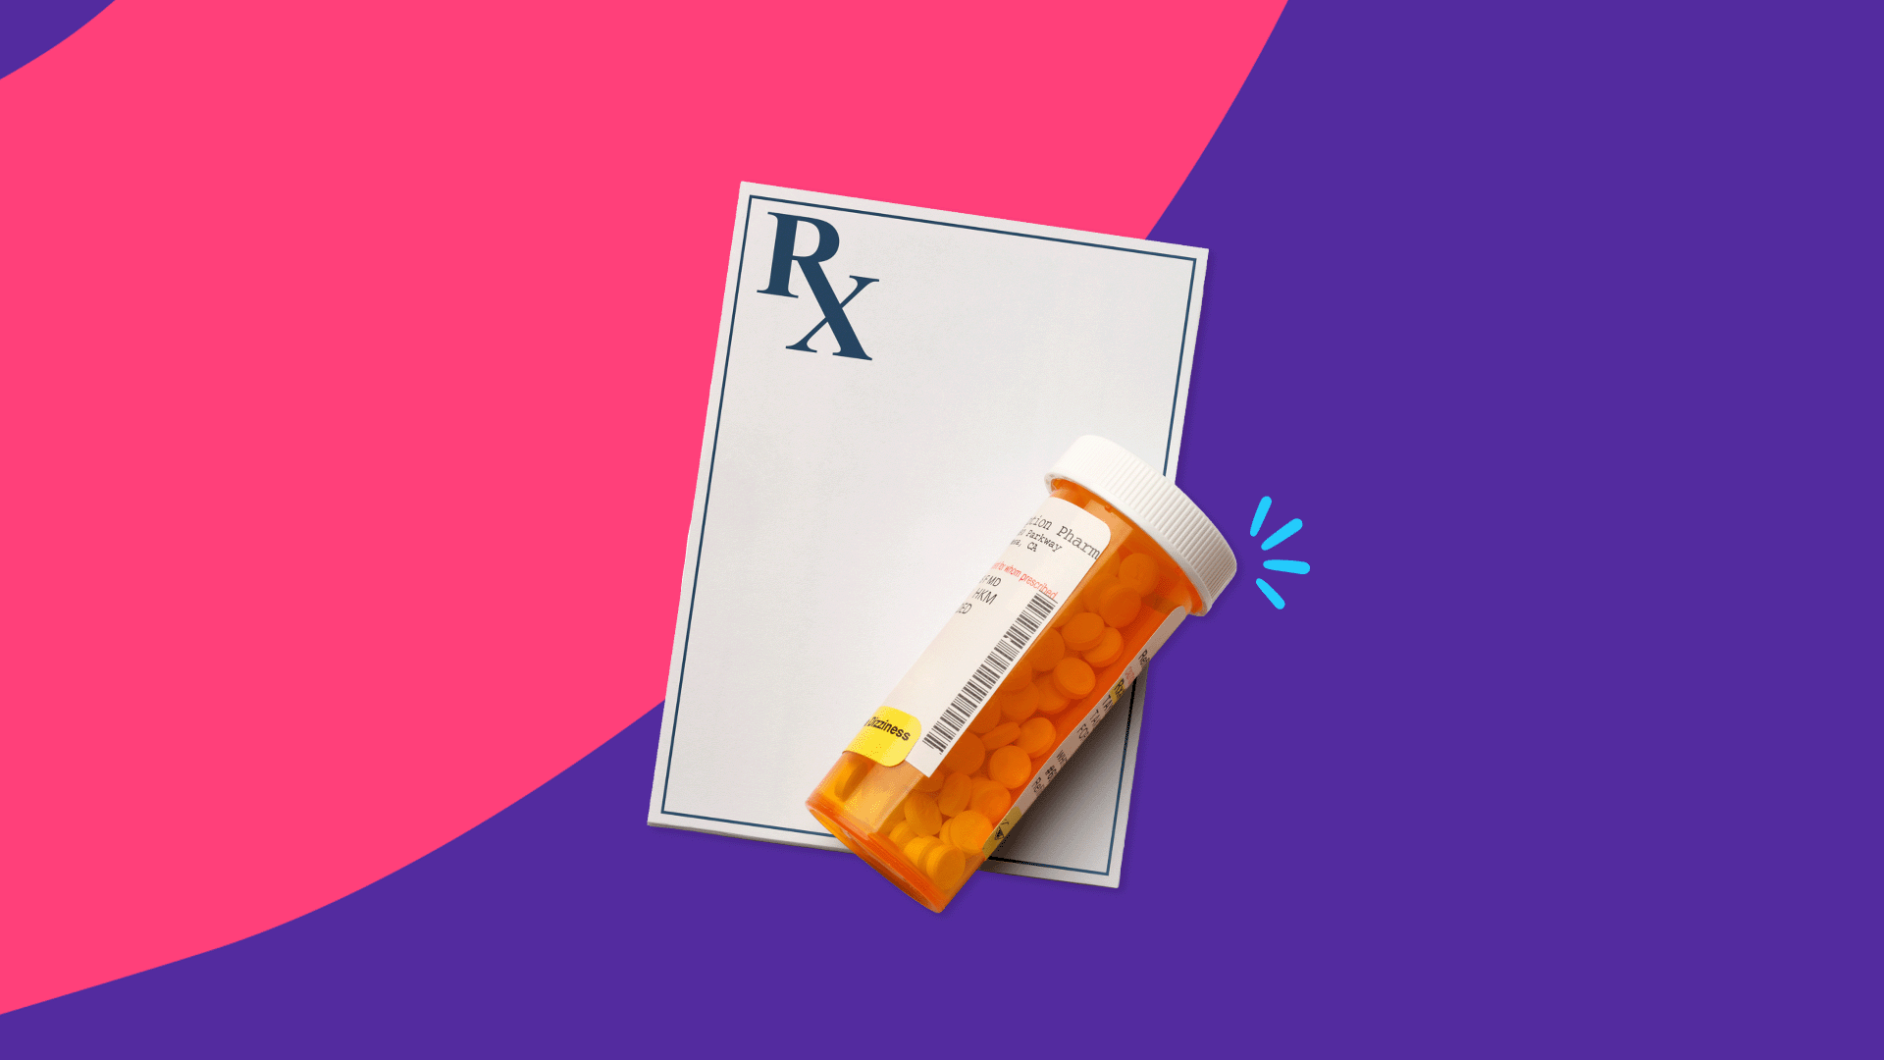 Rx pill bottle and prescription pad: Lexapro generic